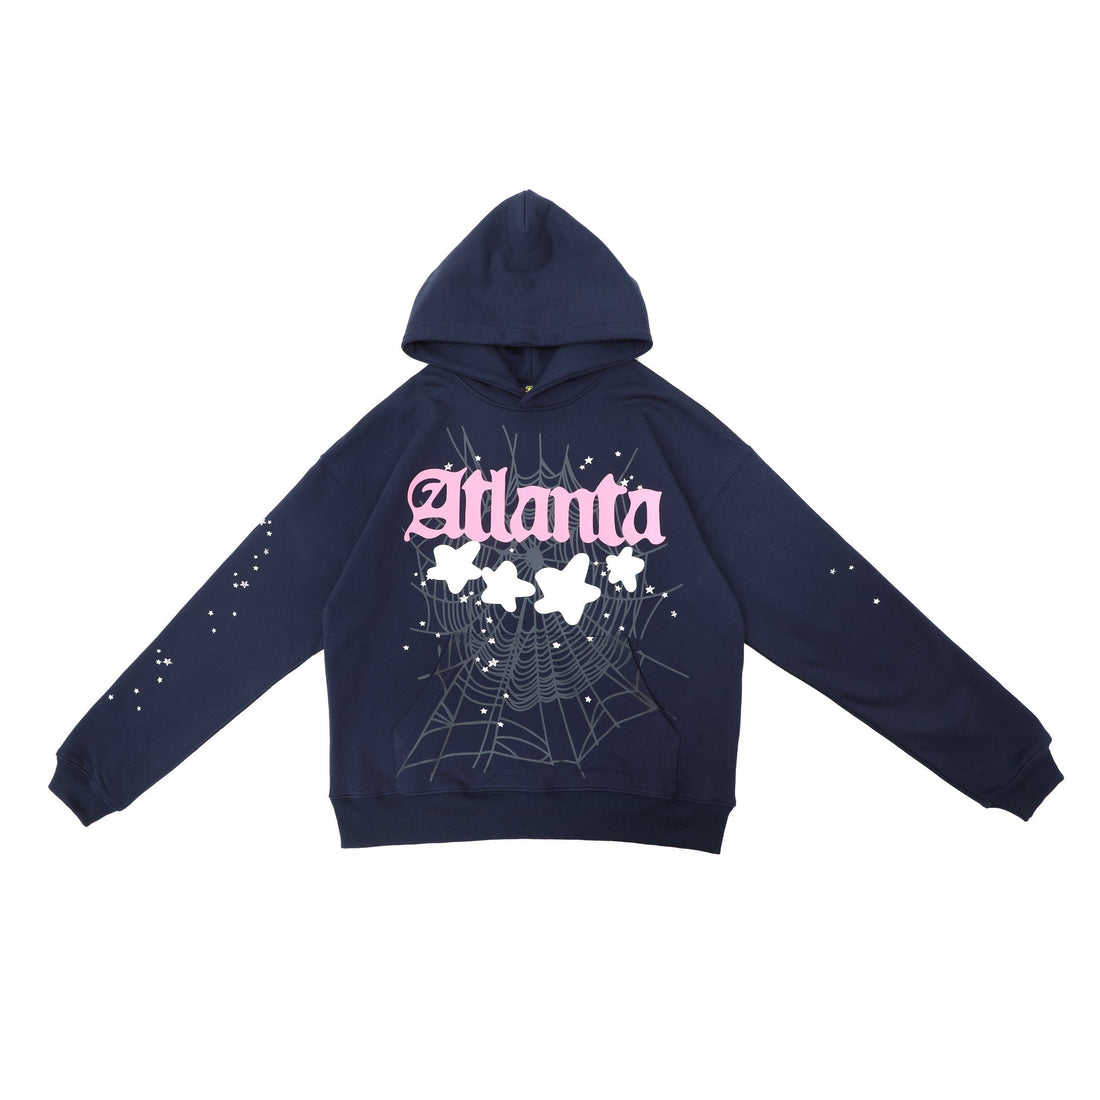 Stylish Navy Atlanta Sp5der Hoodie - Trendy Star and Web Print Hooded Sweatshirt - Seakoff